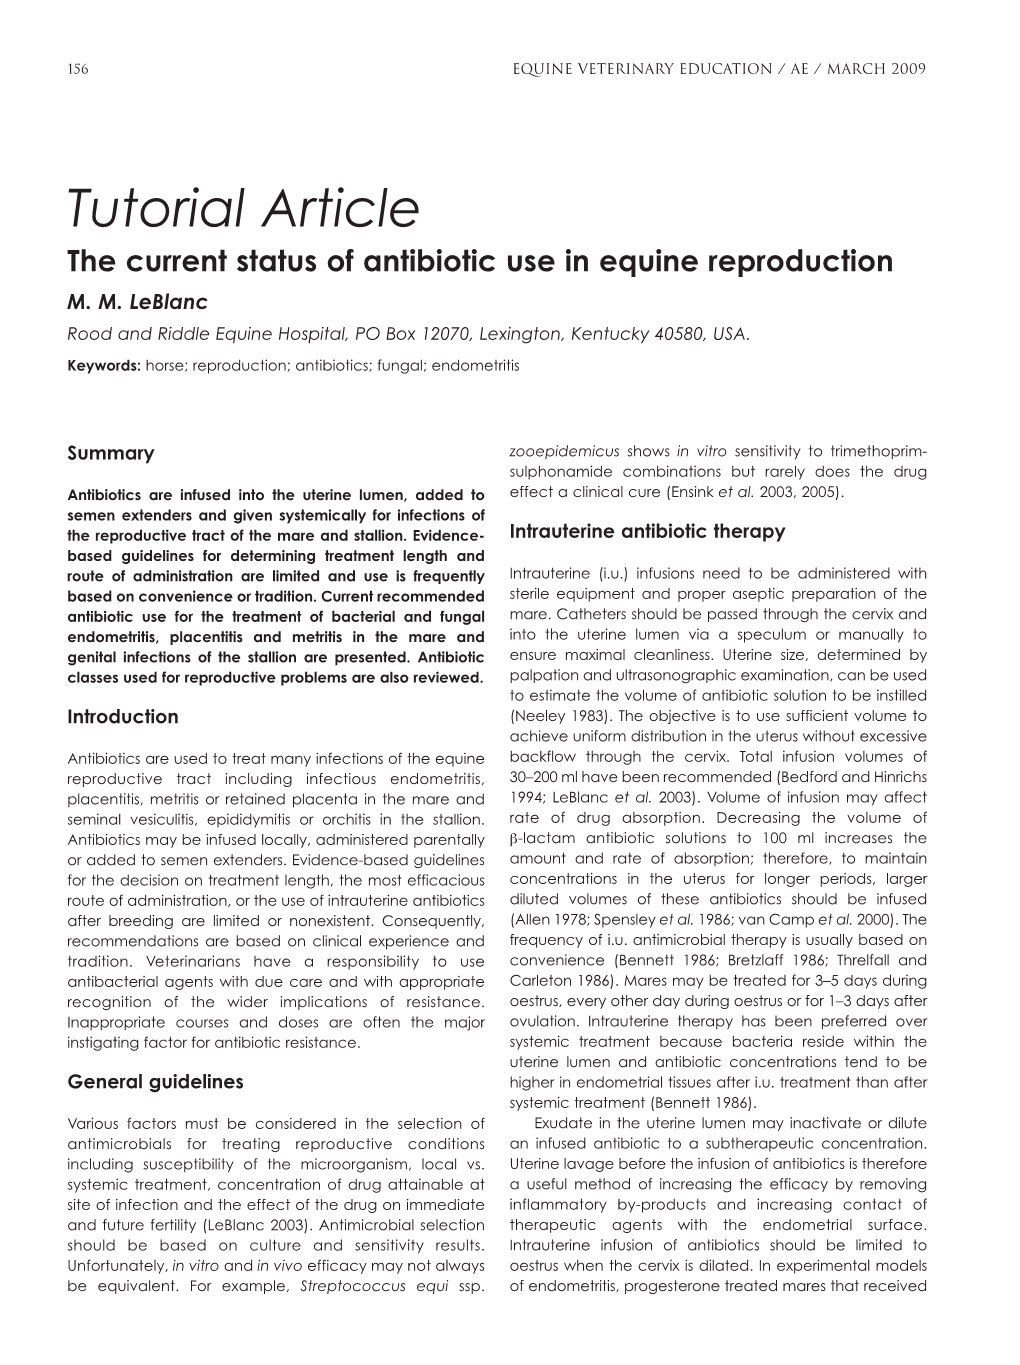 Tutorial Article the Current Status of Antibiotic Use in Equine Reproduction M